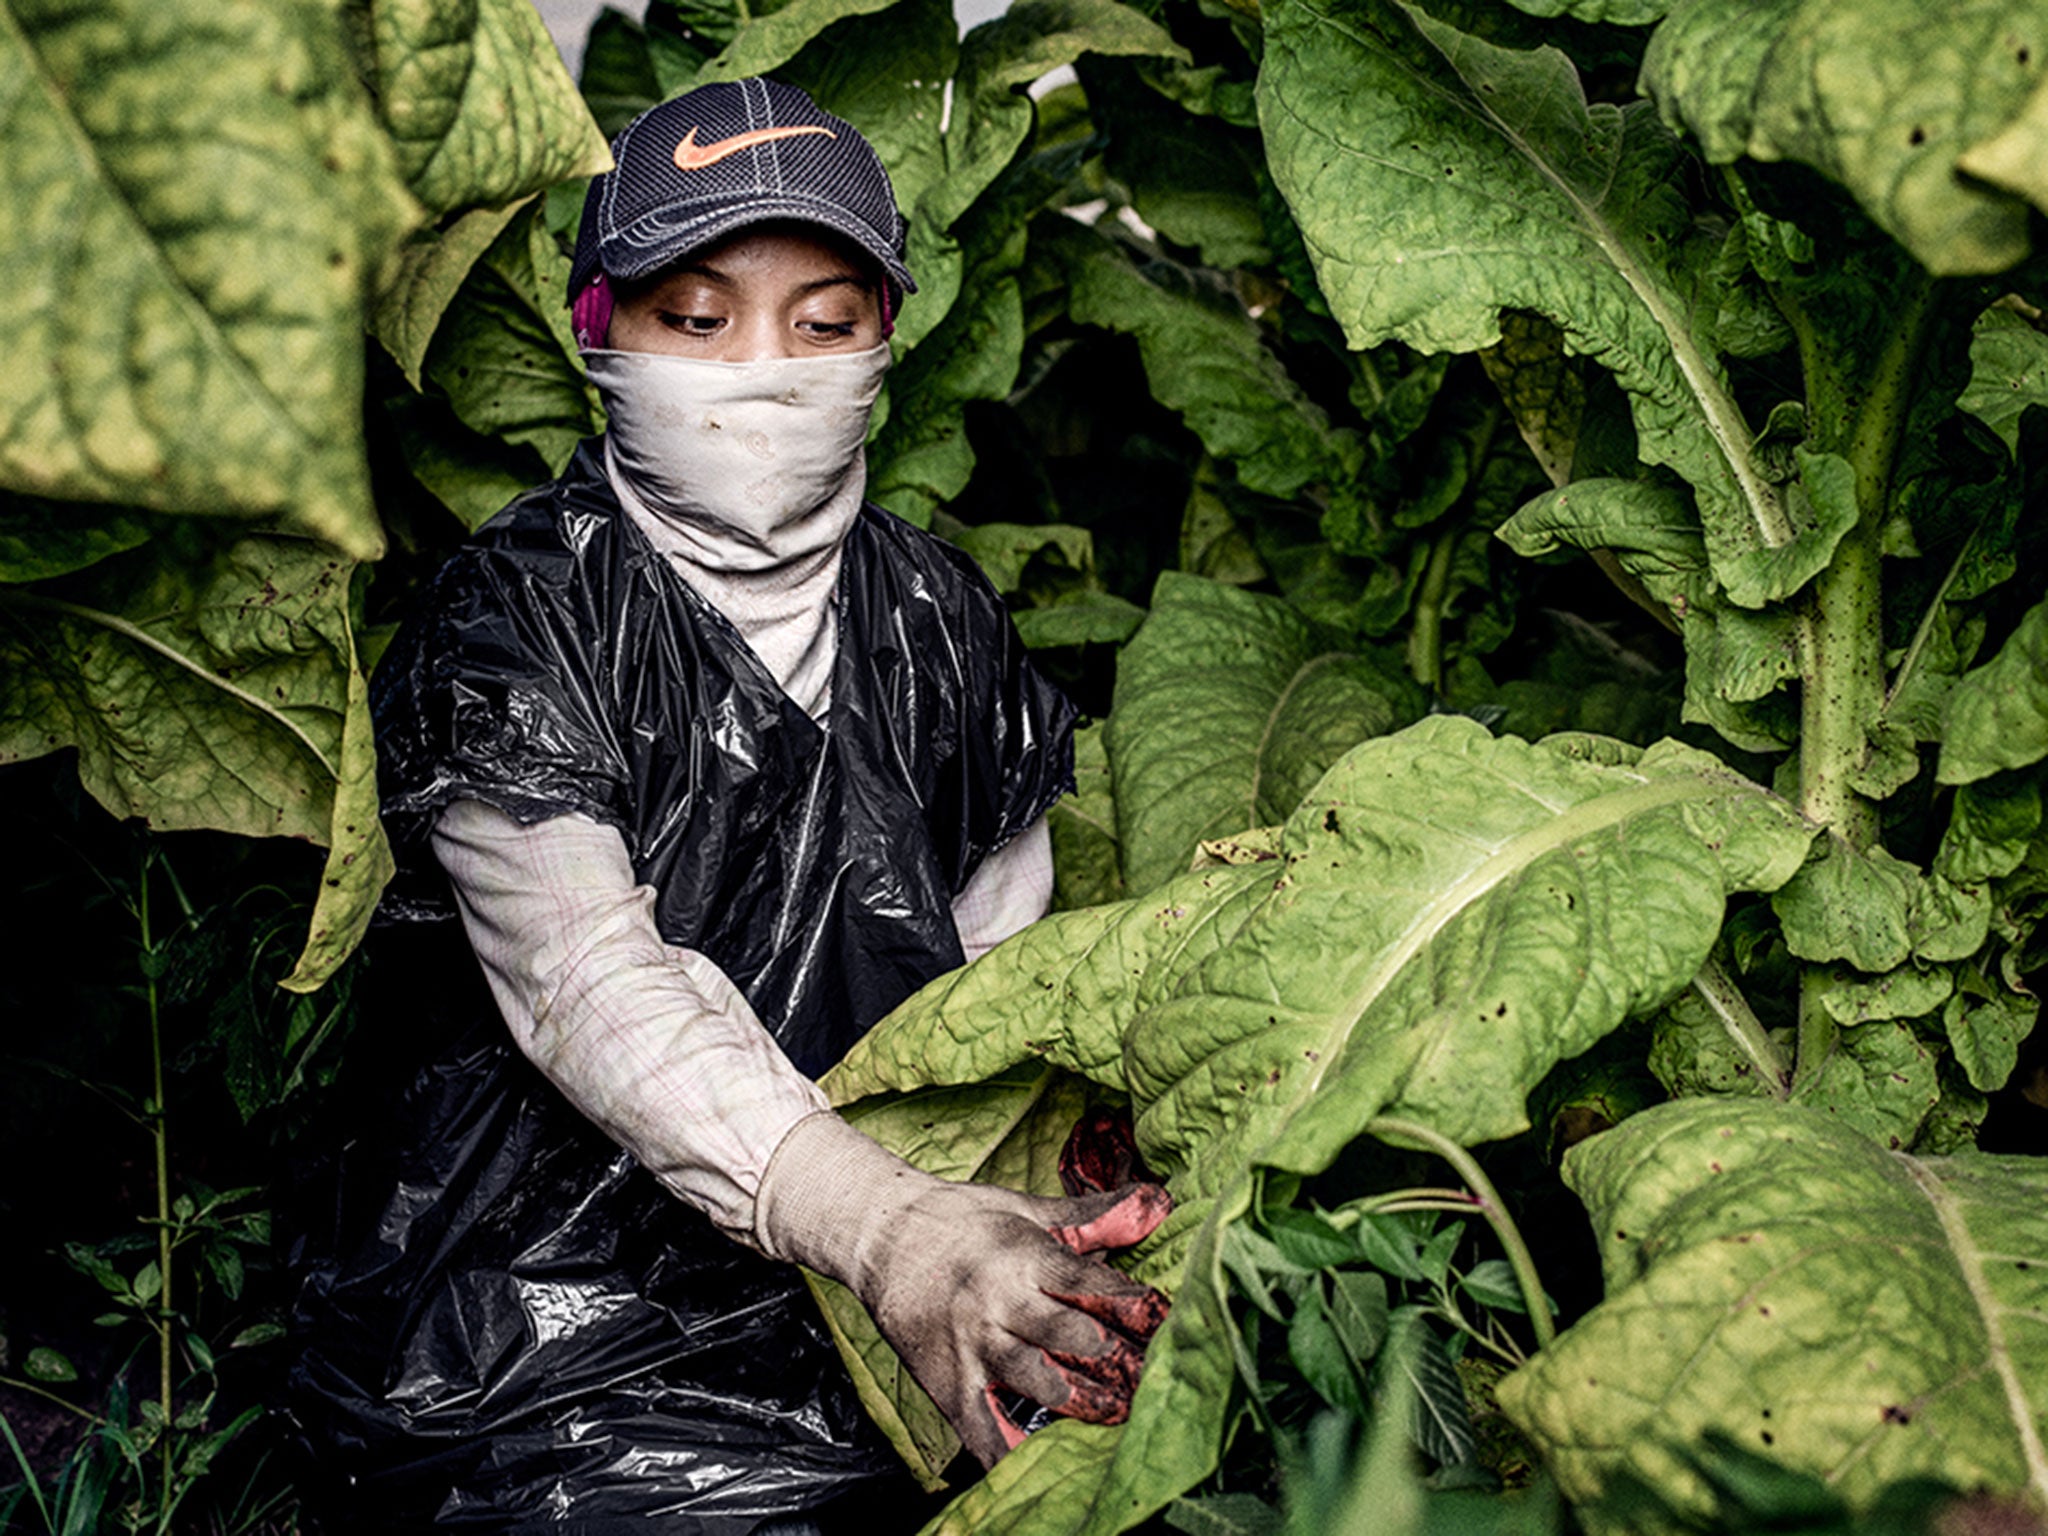 'Sofia,' a 17-year-old, works in a tobacco field in North Carolina